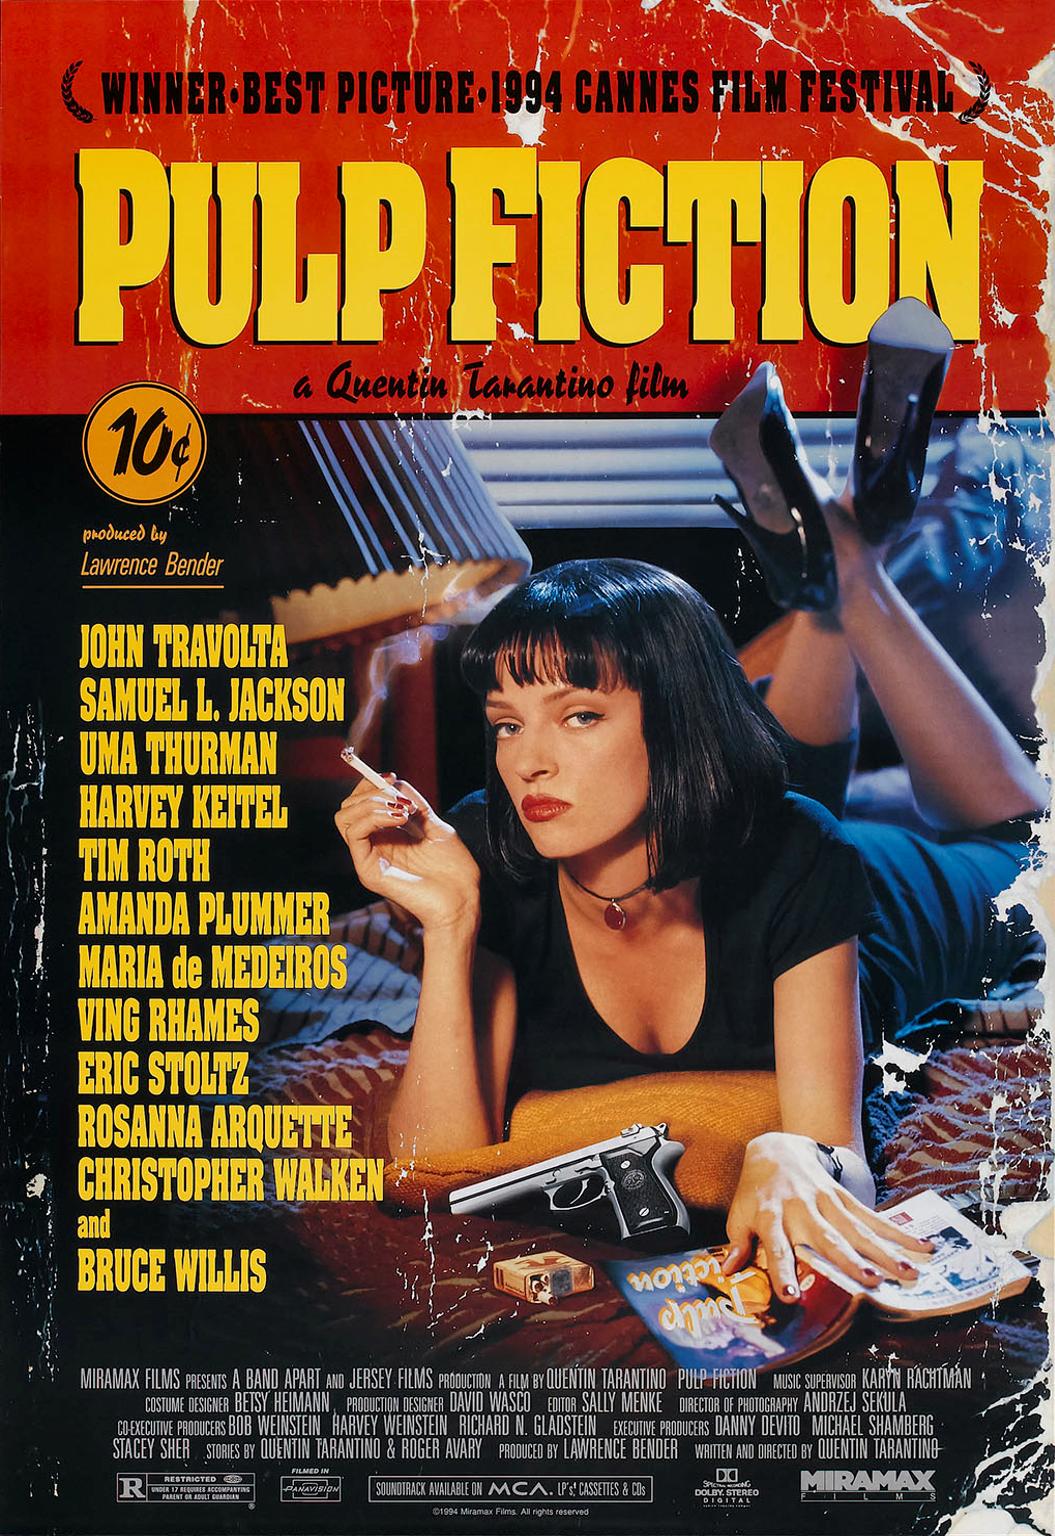 pulp fiction imdb